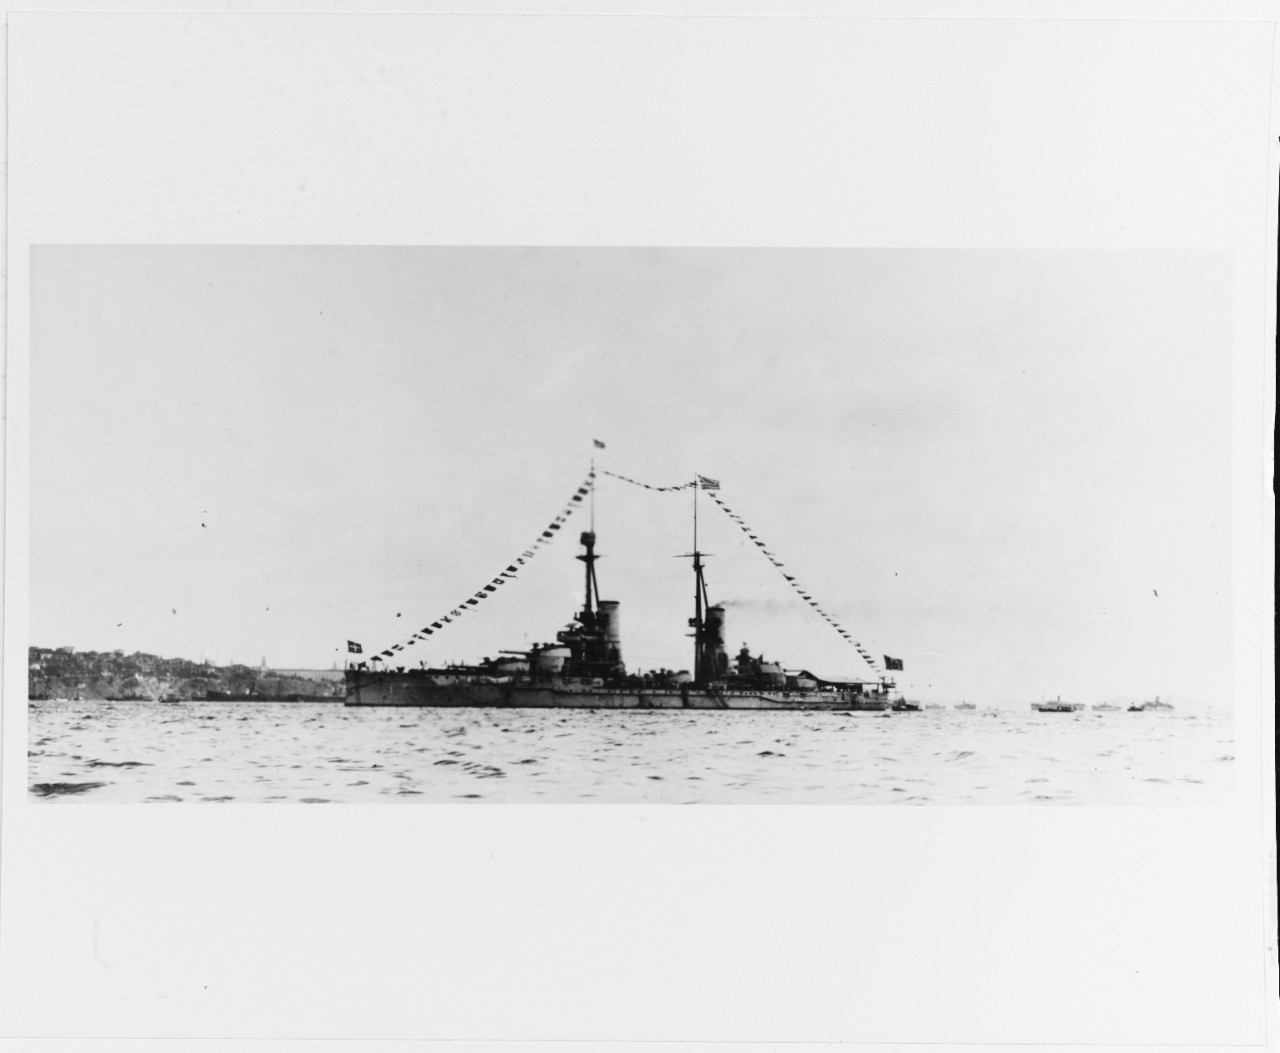 R.N. JULIA GIULIO CESARE (Italian Battleship, 1911-1955)